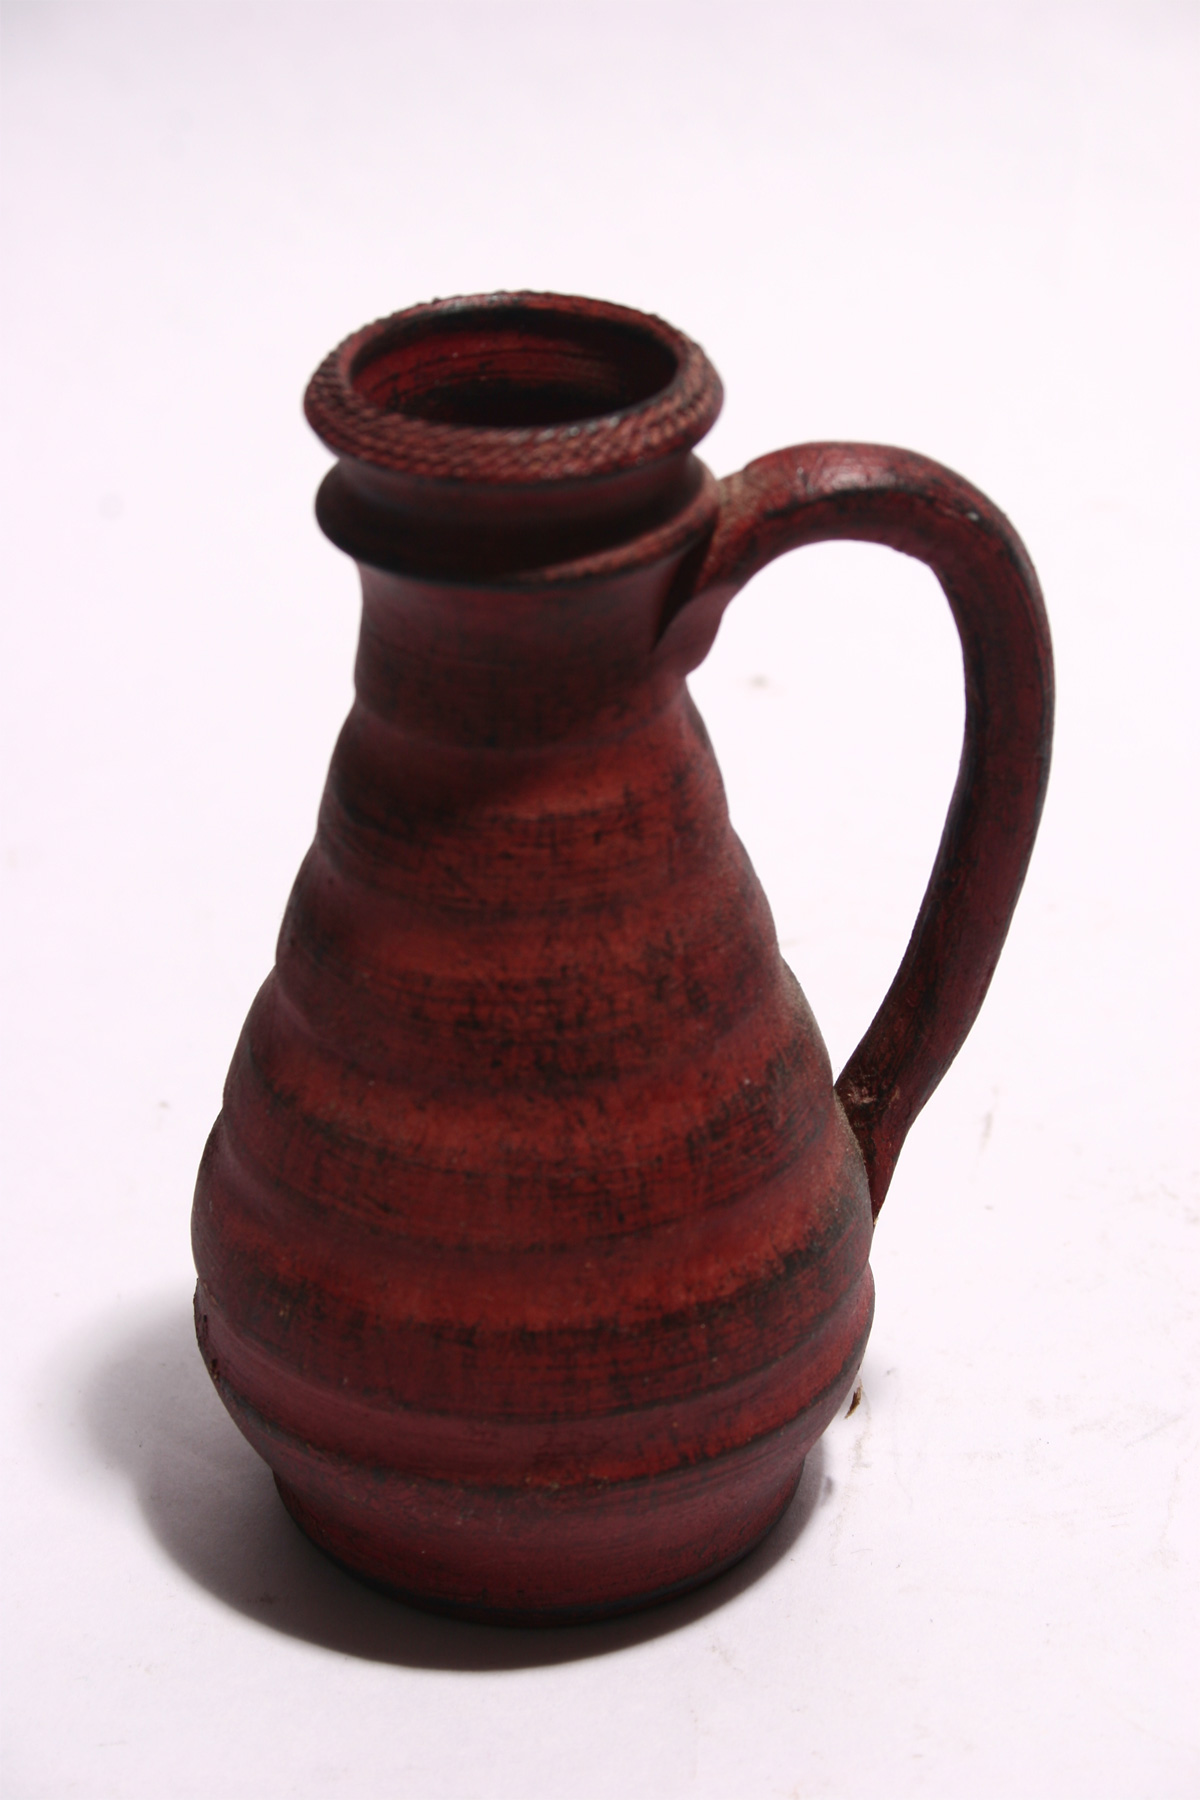 Ceramic jug on white